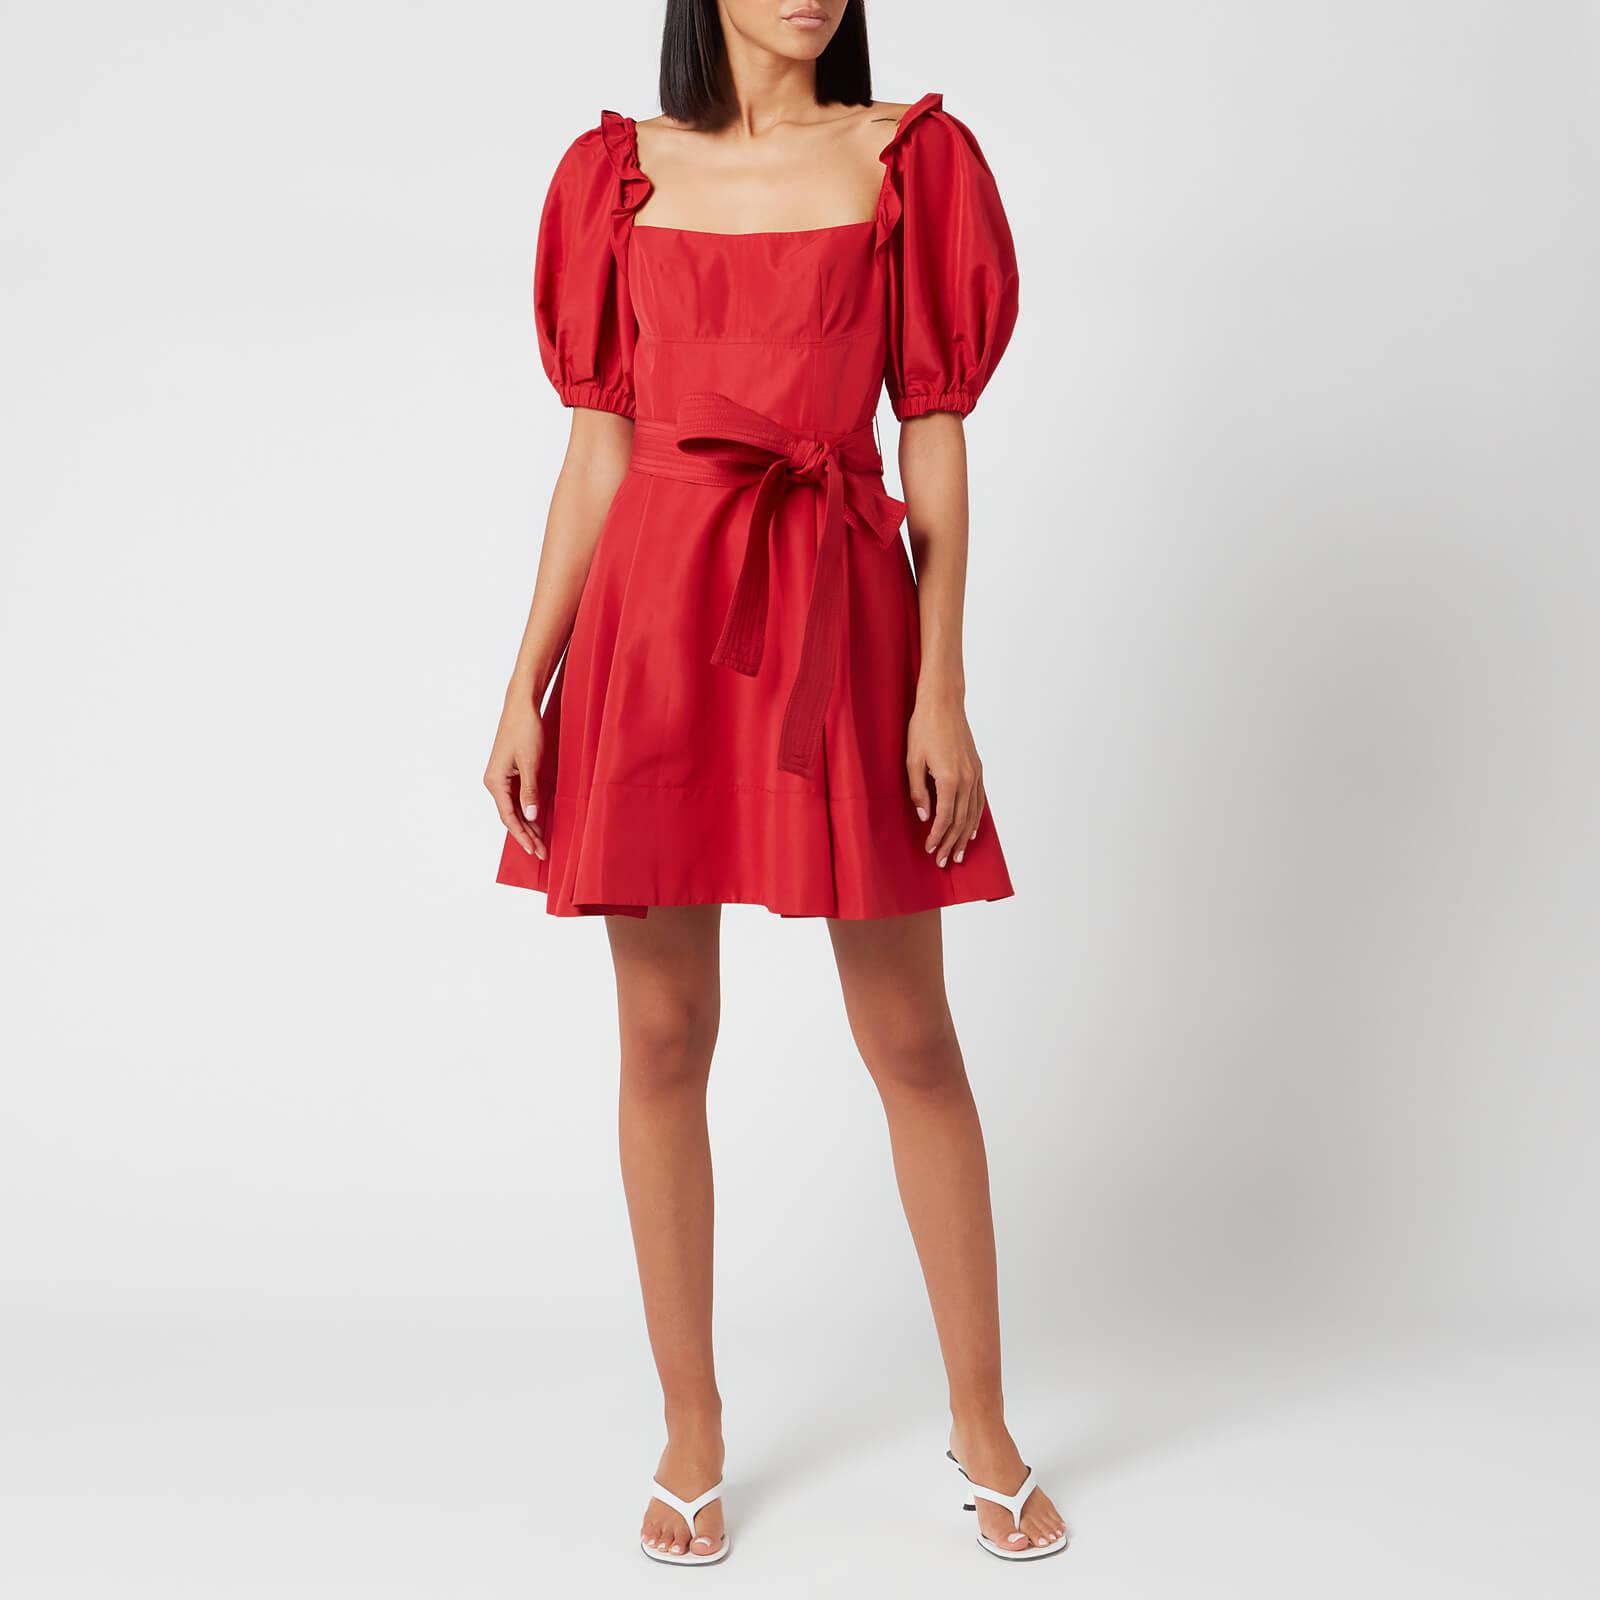 Self-Portrait Synthetic Taffeta Mini Dress in Red - Lyst